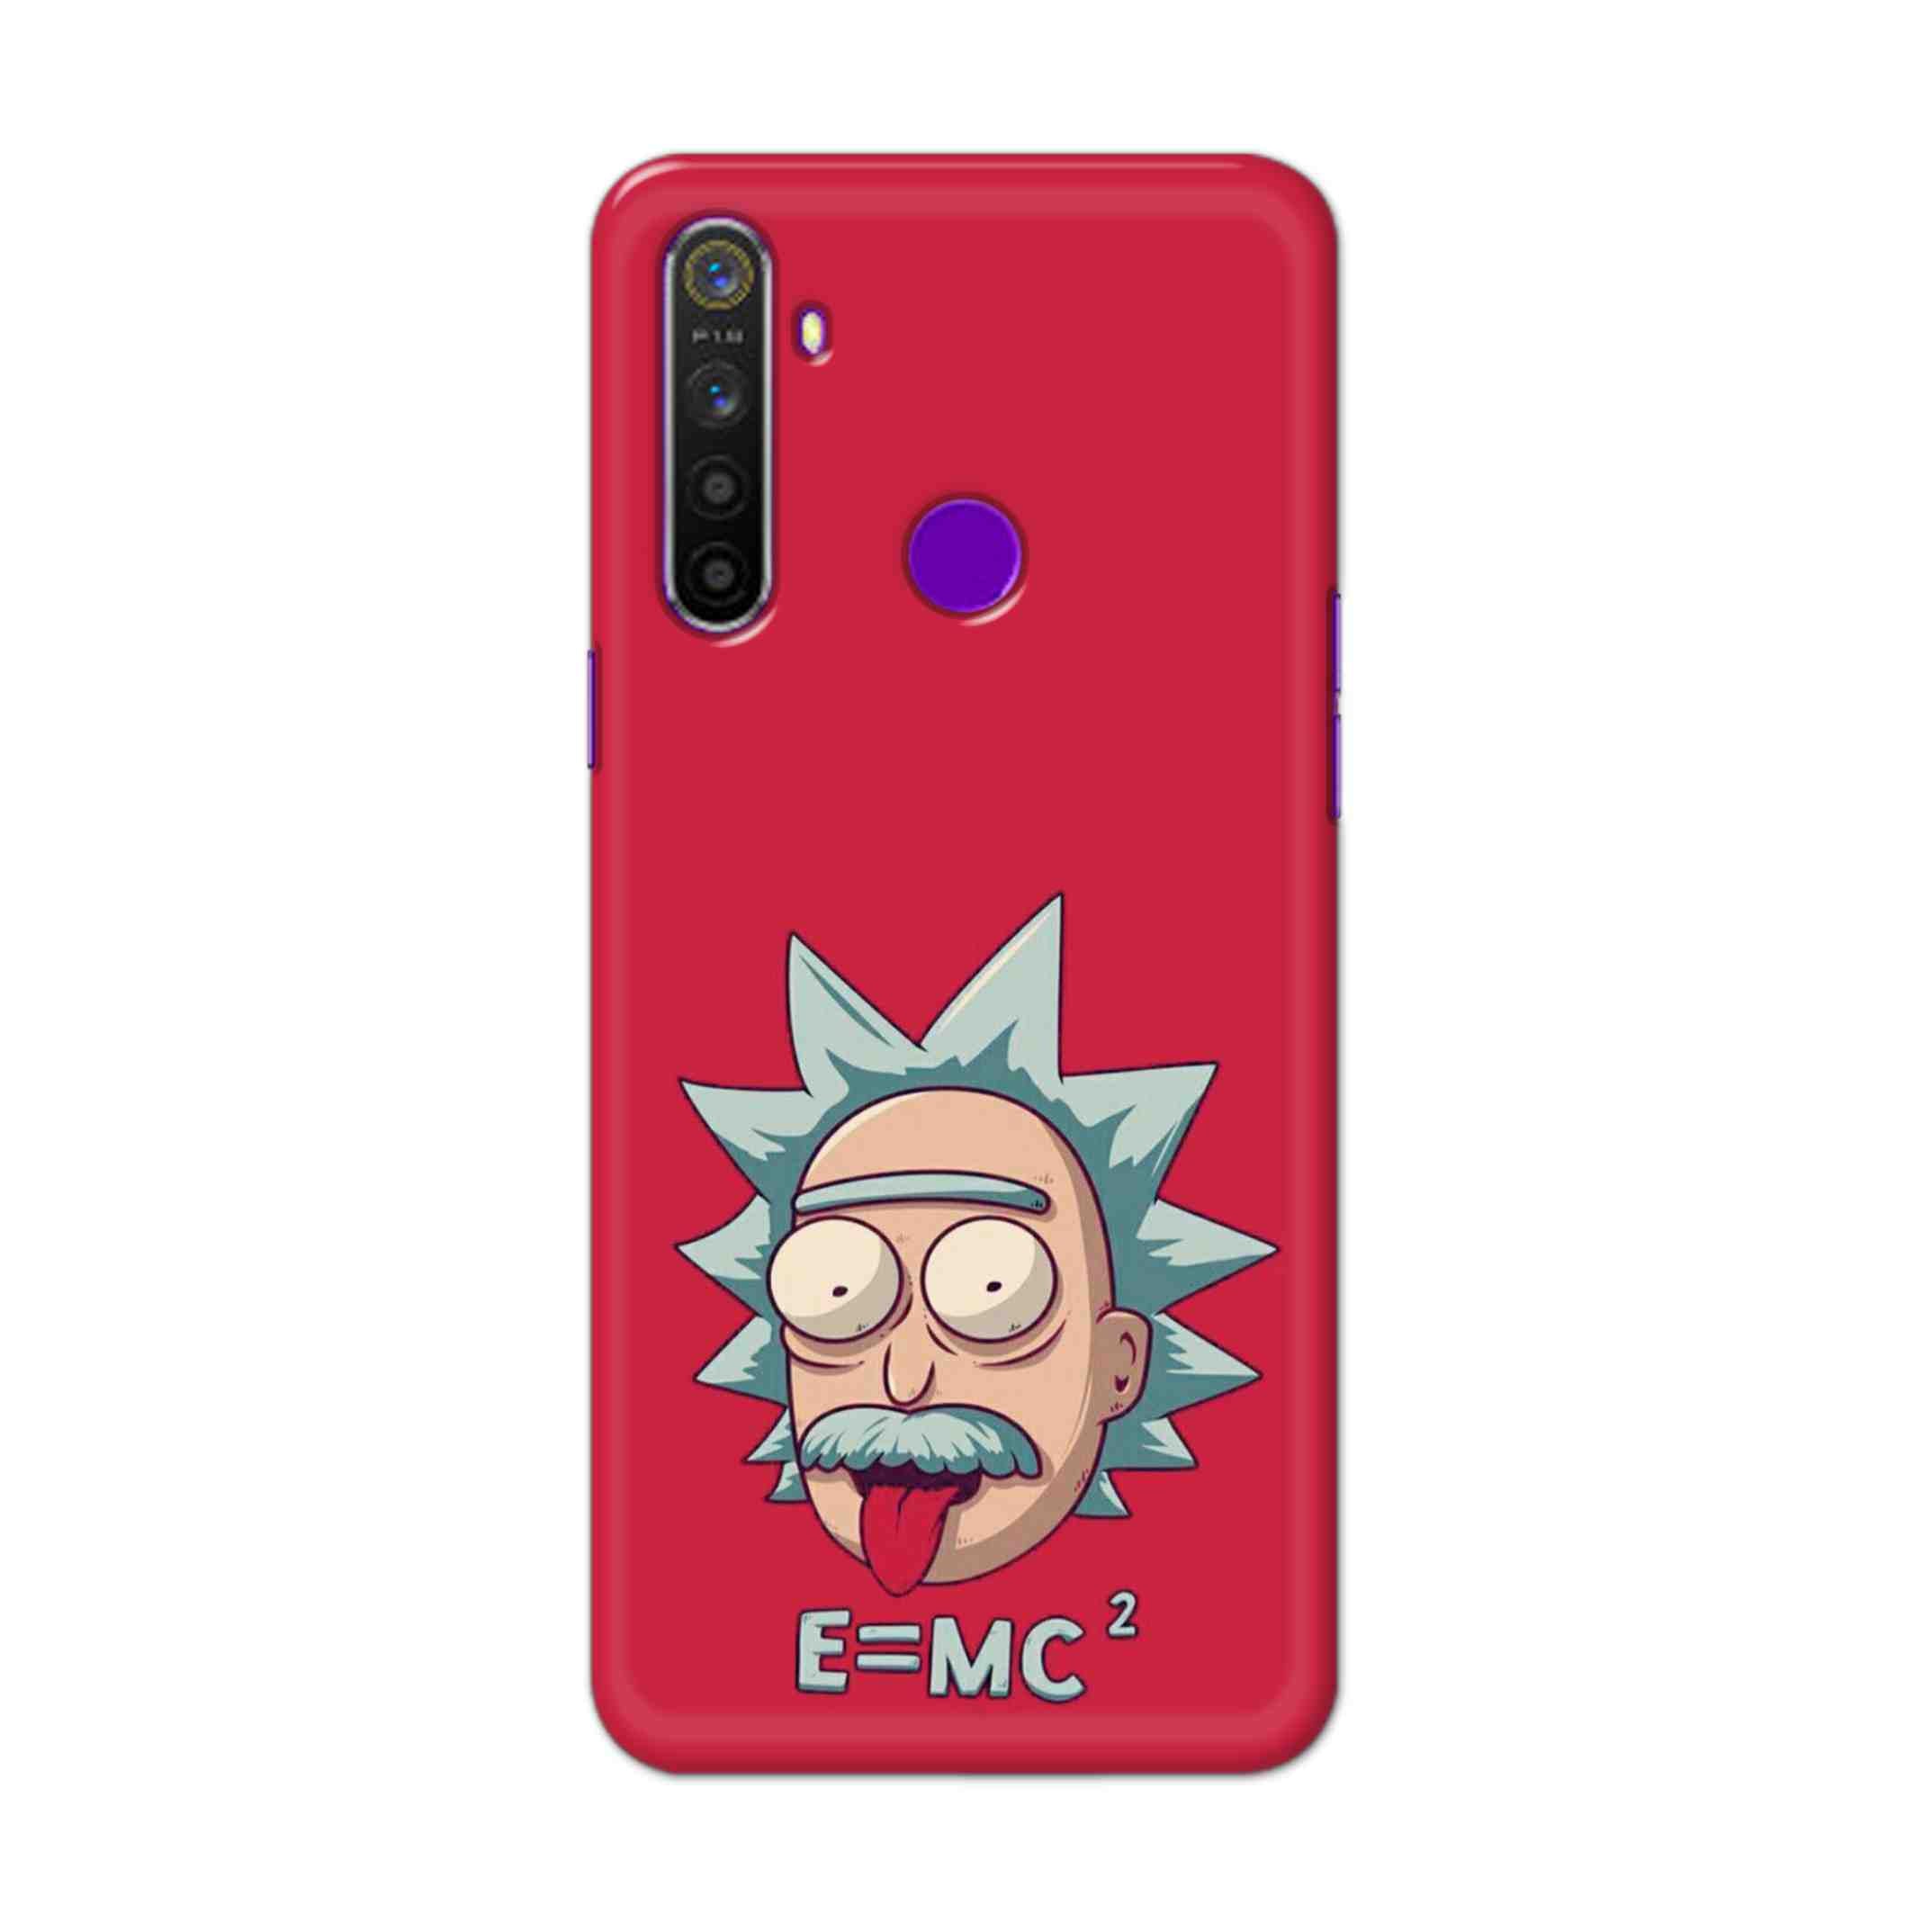 Buy E=Mc Hard Back Mobile Phone Case Cover For Realme 5 Online